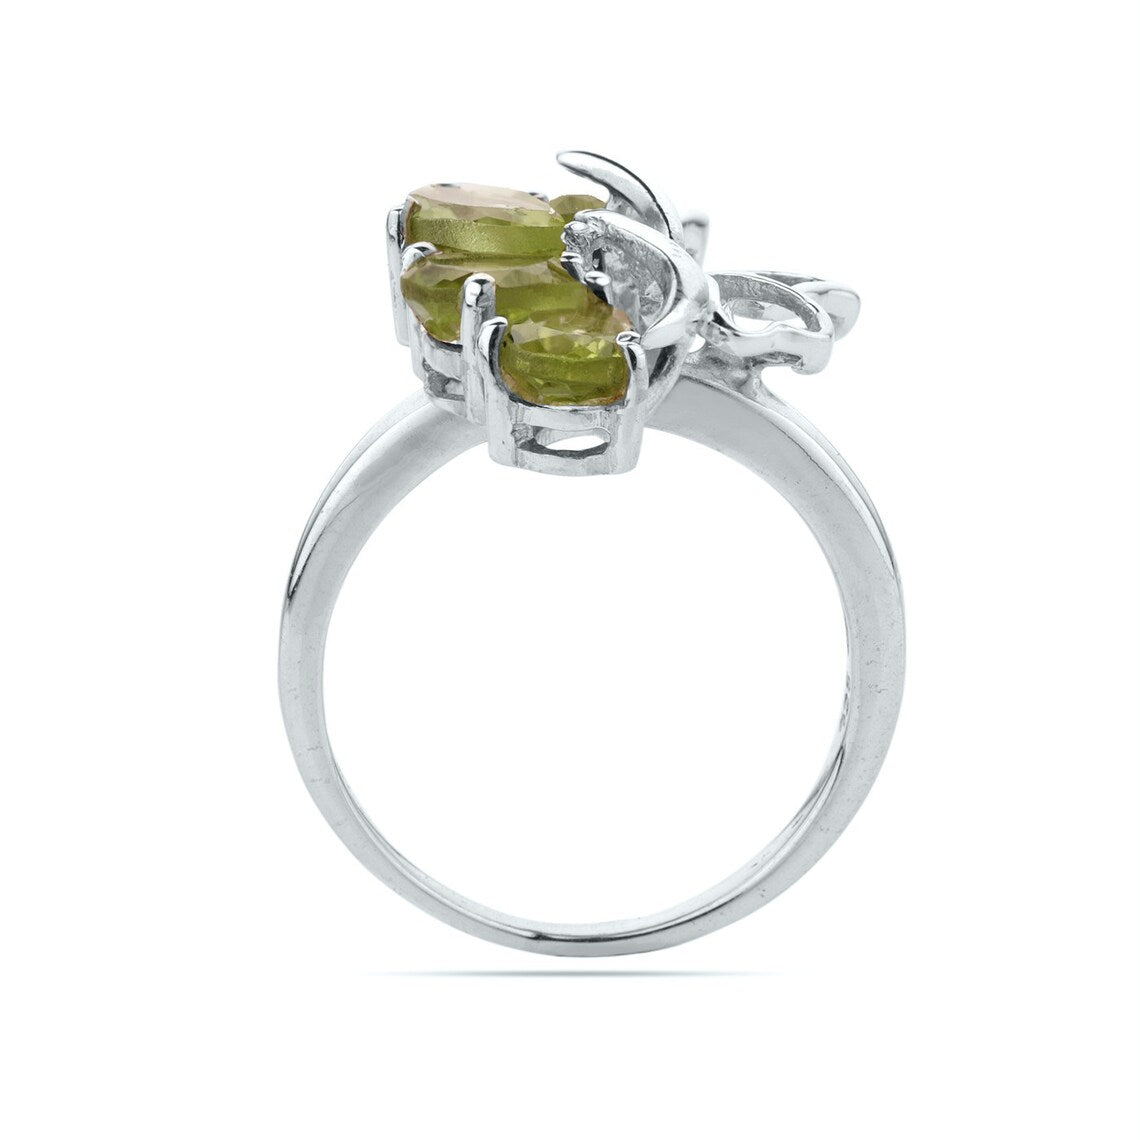 Multi Gemstone Ring, Garnet, Amethyst Ring, iolite Ring, 925 Sterling Silver Peridot Garnet Amethyst Rings